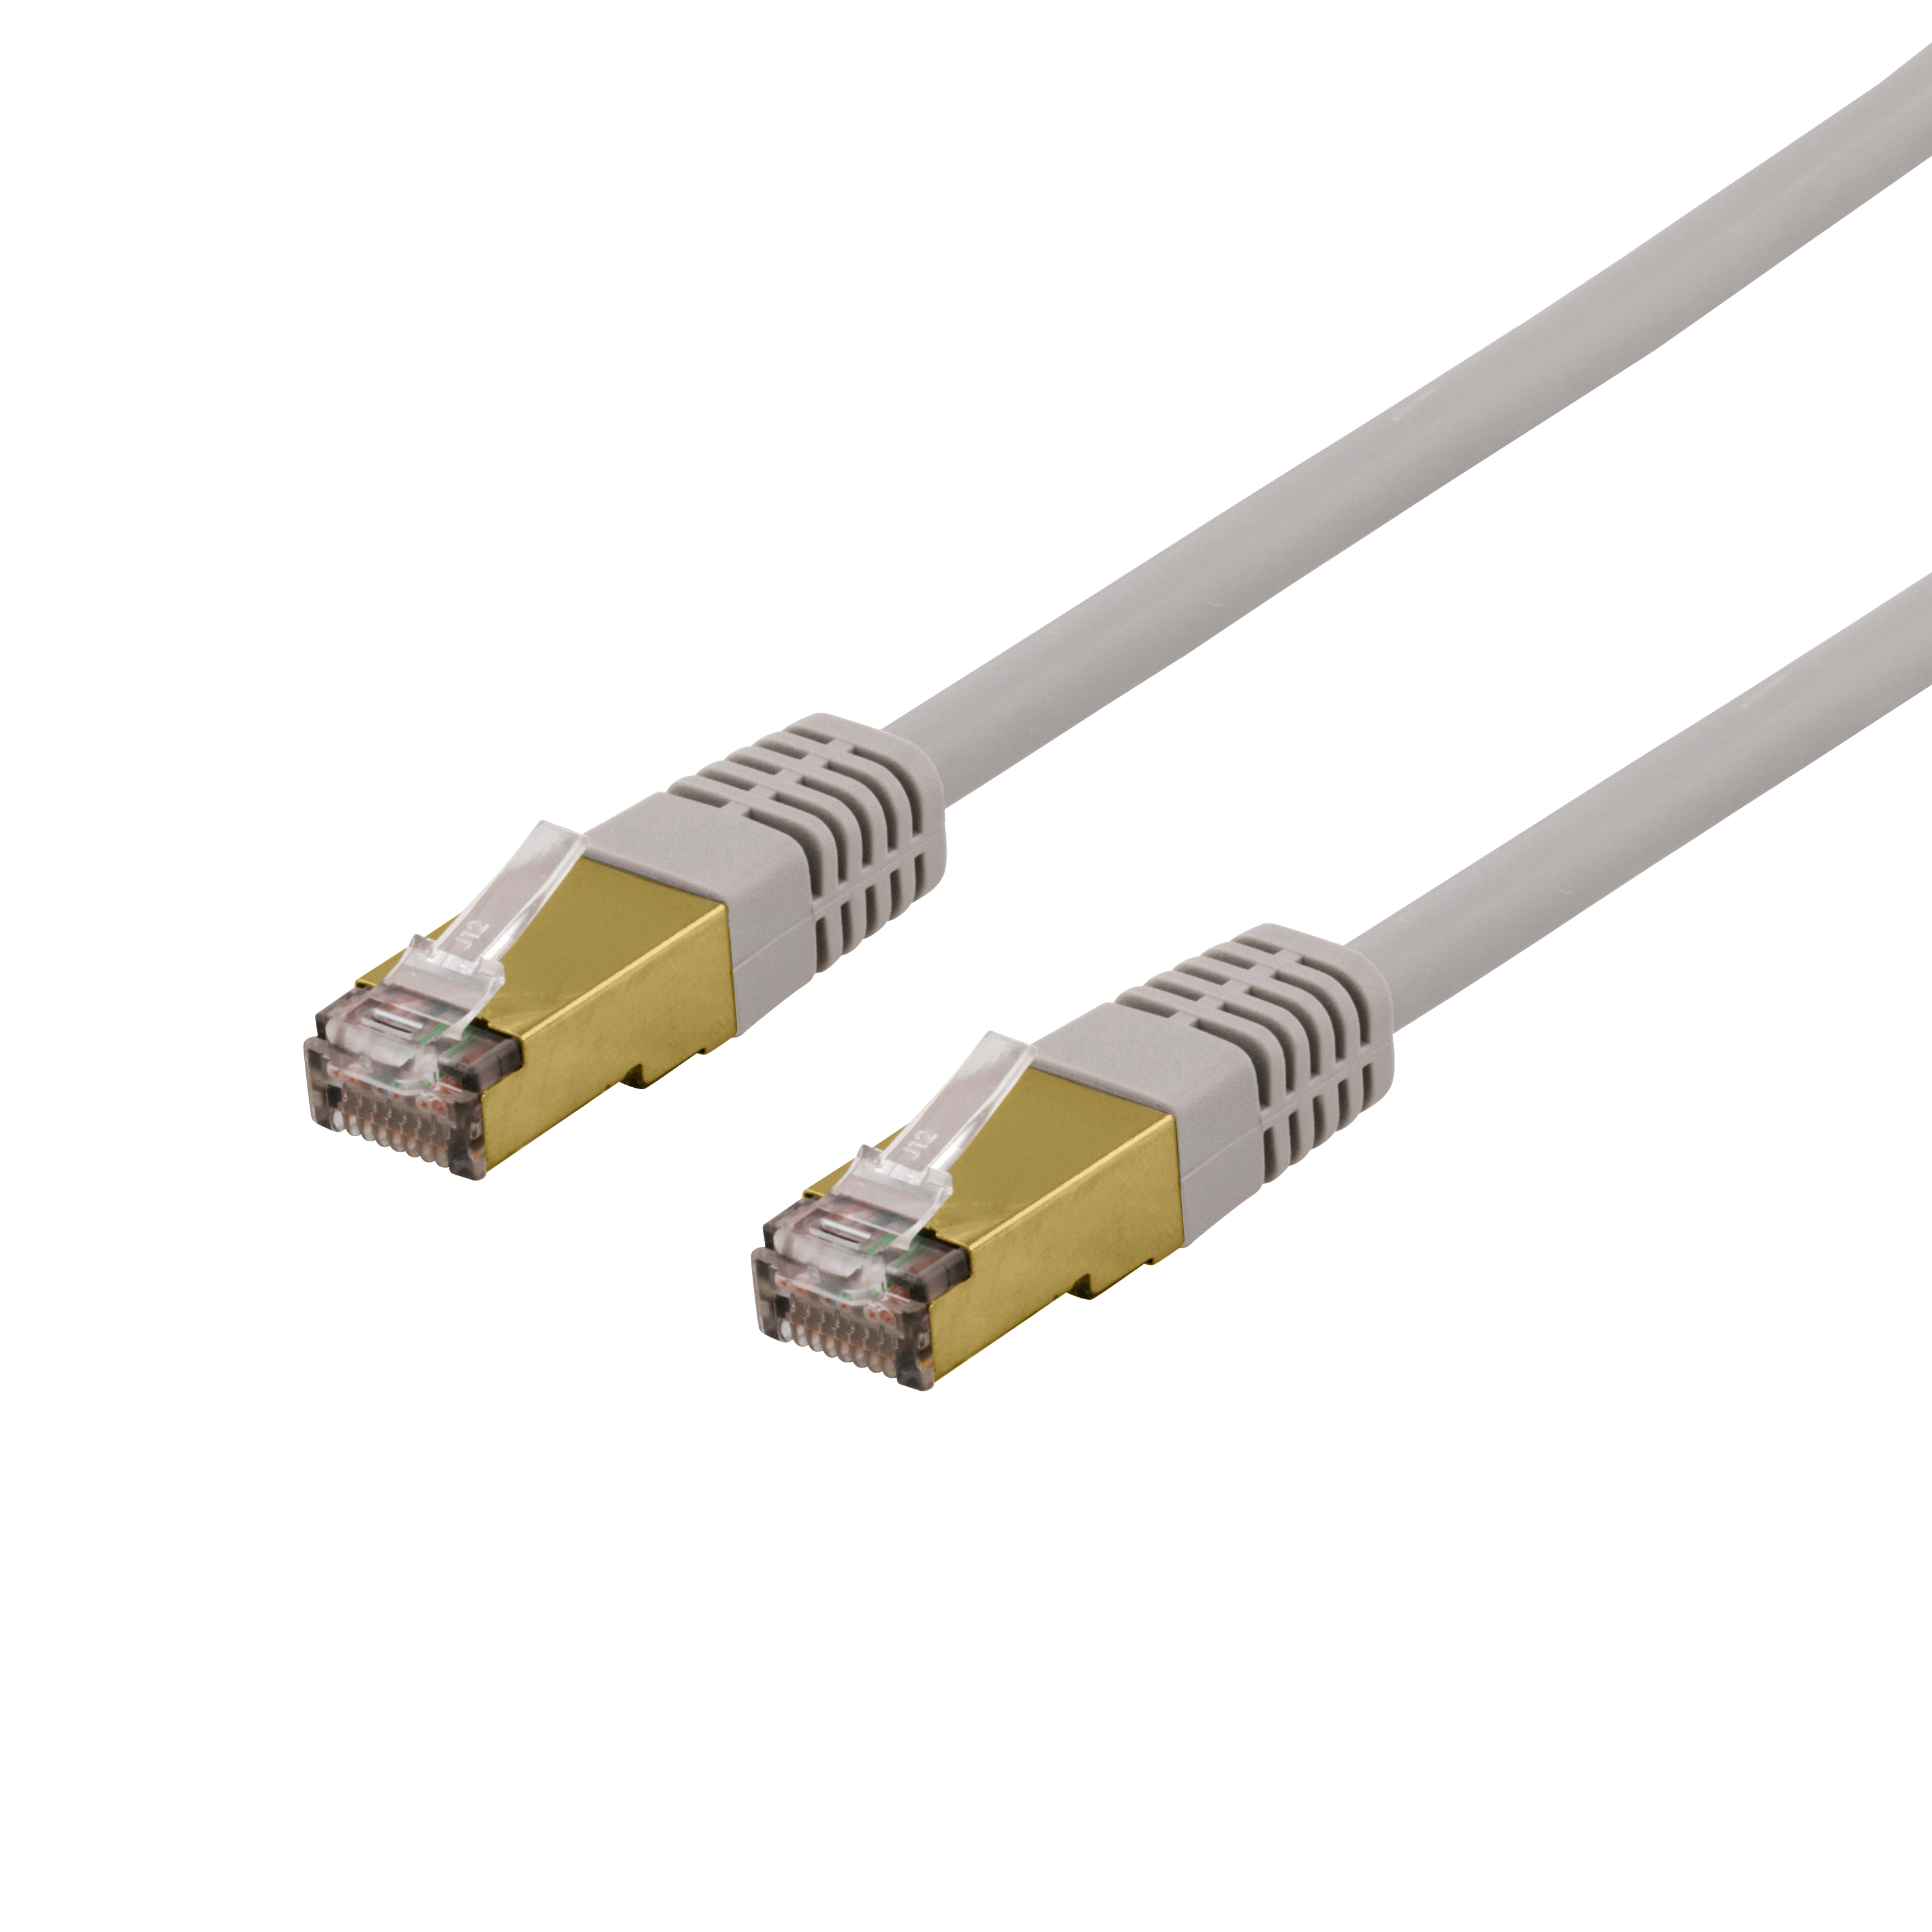 Cable DELTACO S / FTP Cat6a, delta certfied, LSZH, 1,5m, gray / SFTP-611AH